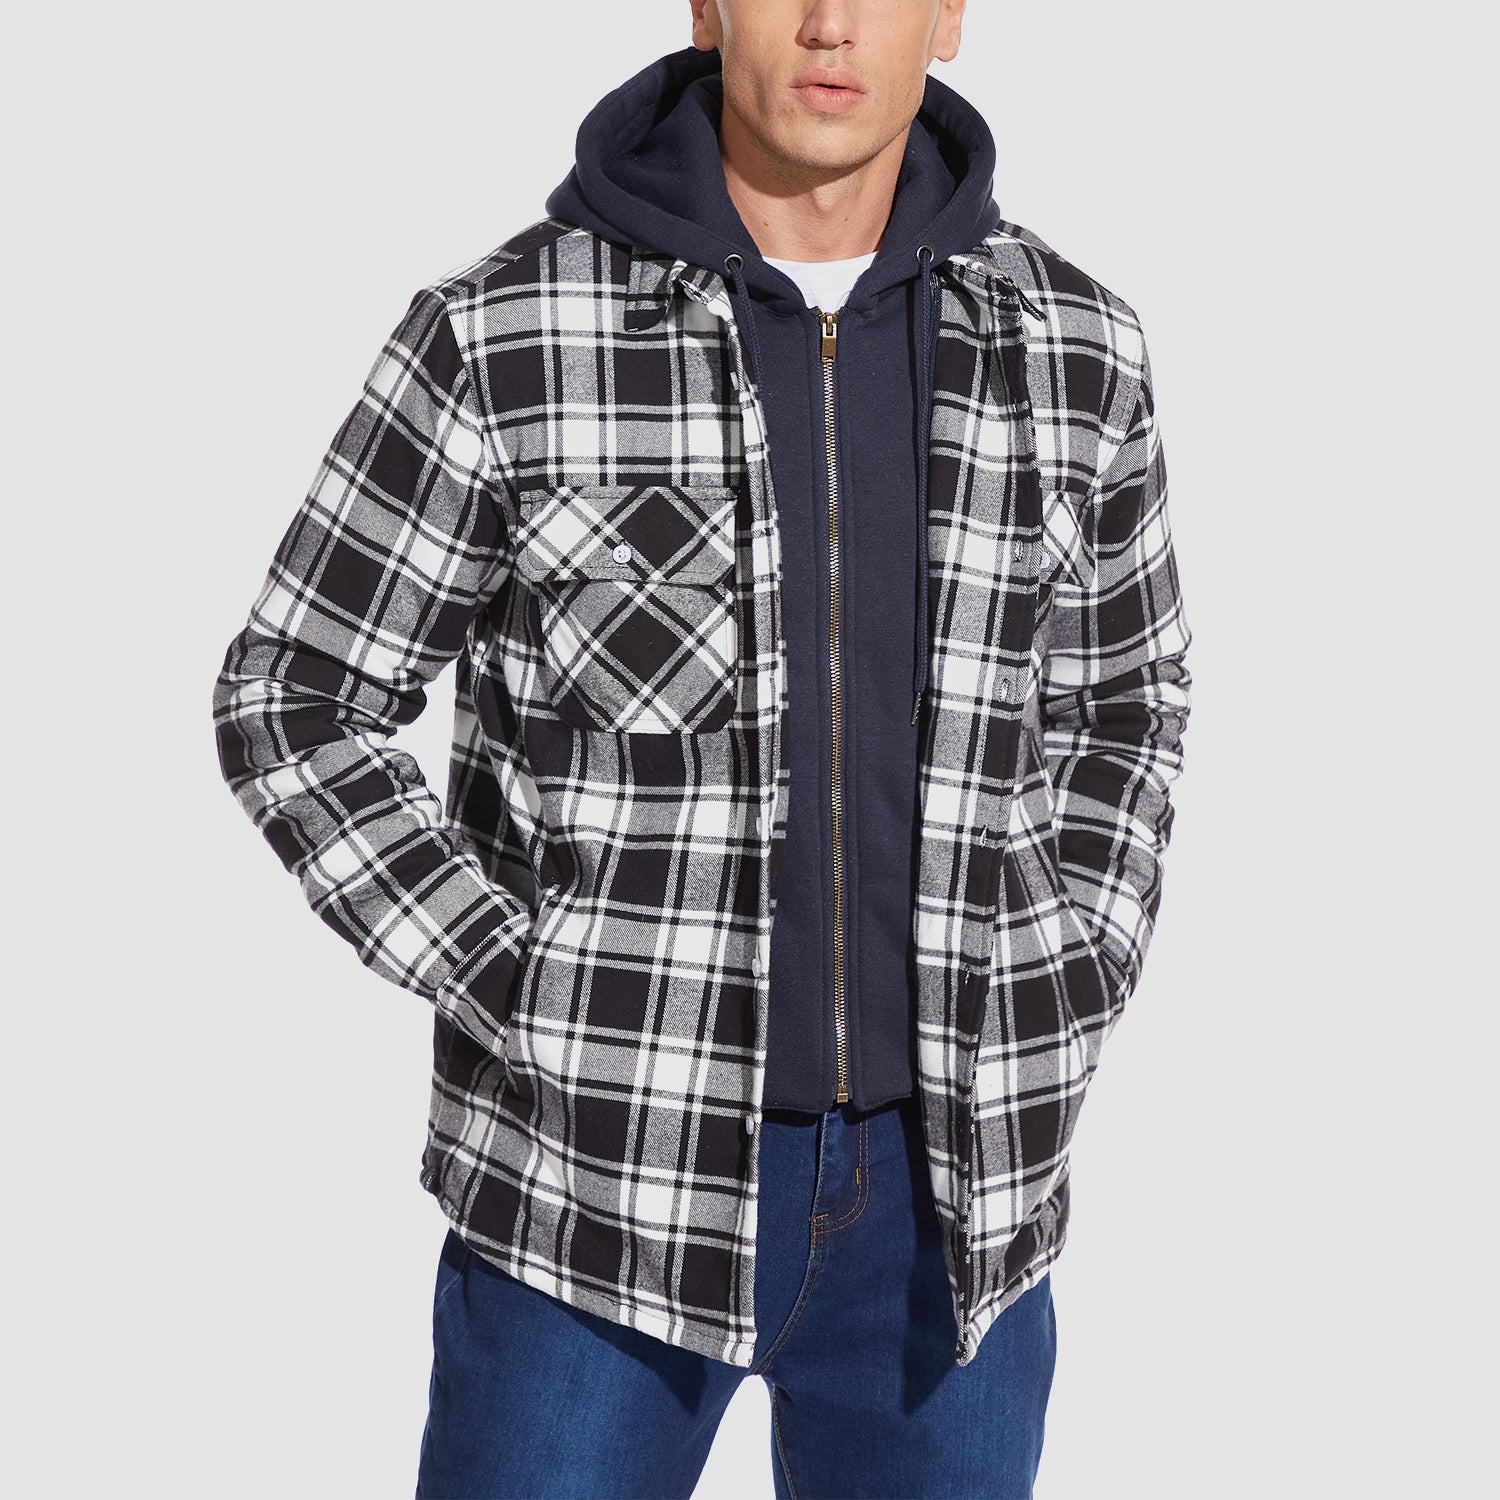 MAGCOMSEN Men's Flannel Jacket with Removable Hood